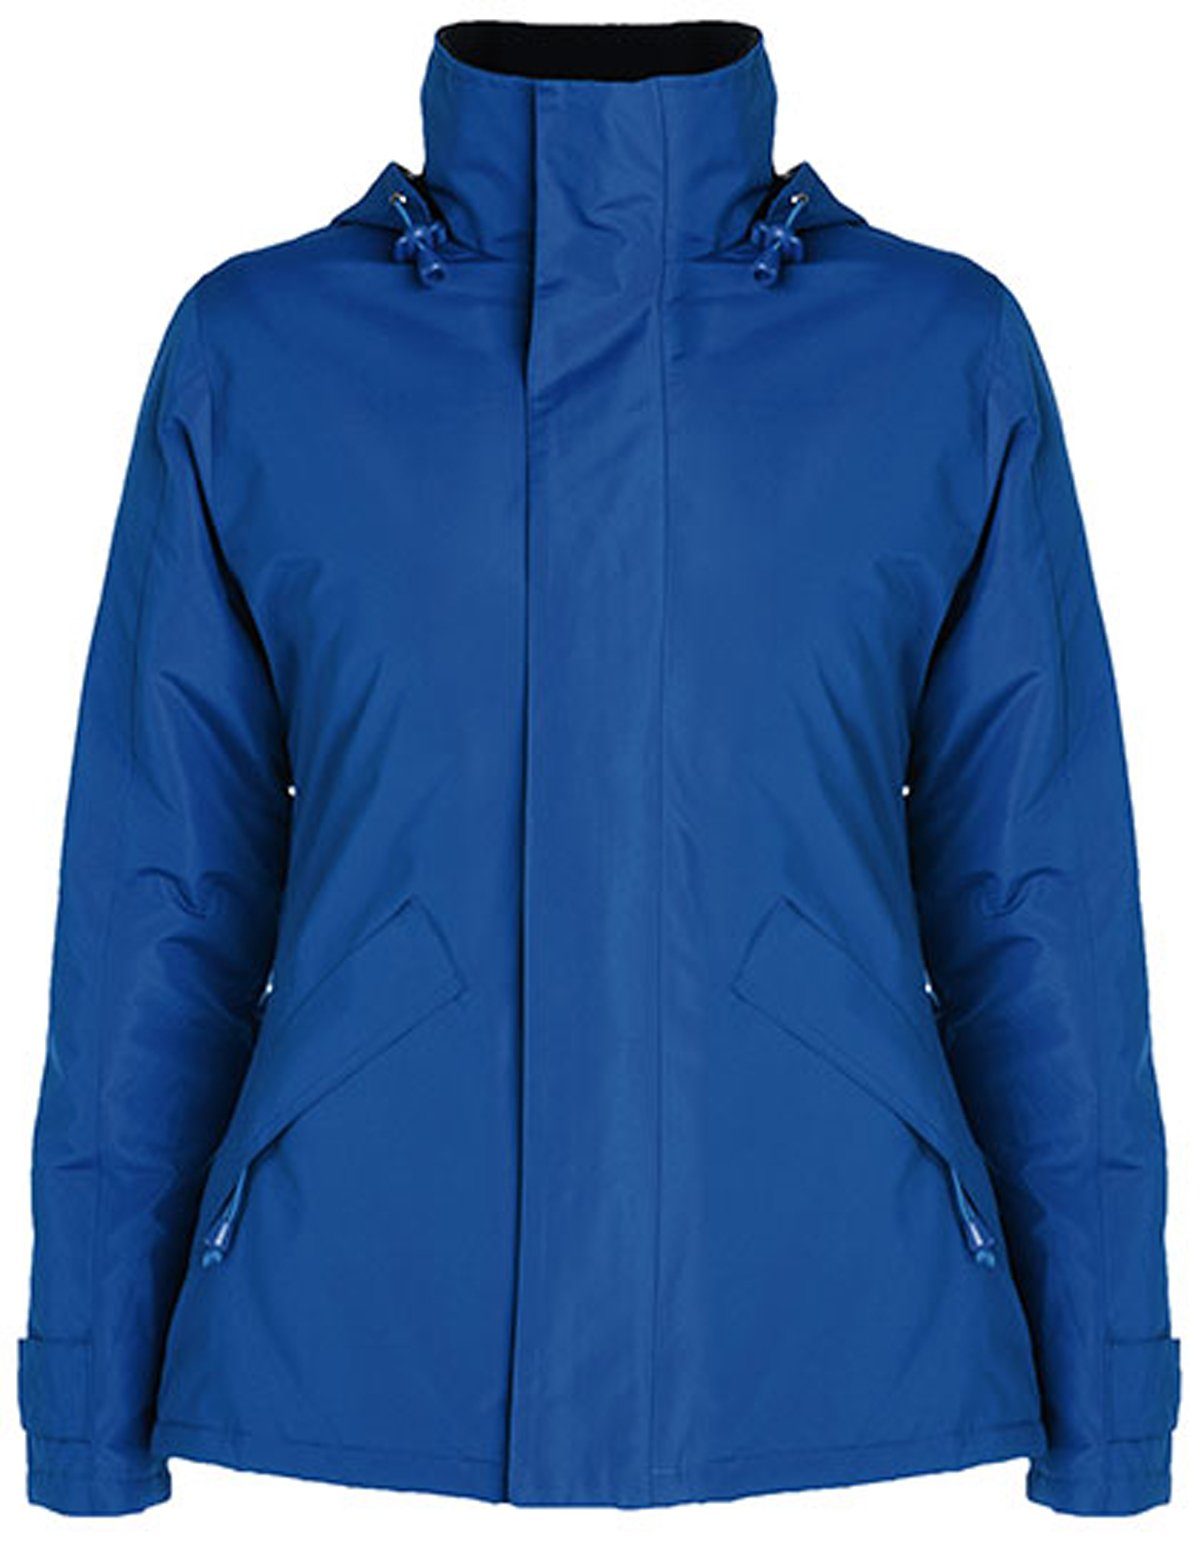 Blue Royal Jacke Europa Outdoorjacke Woman -RY5078- 05 Roly